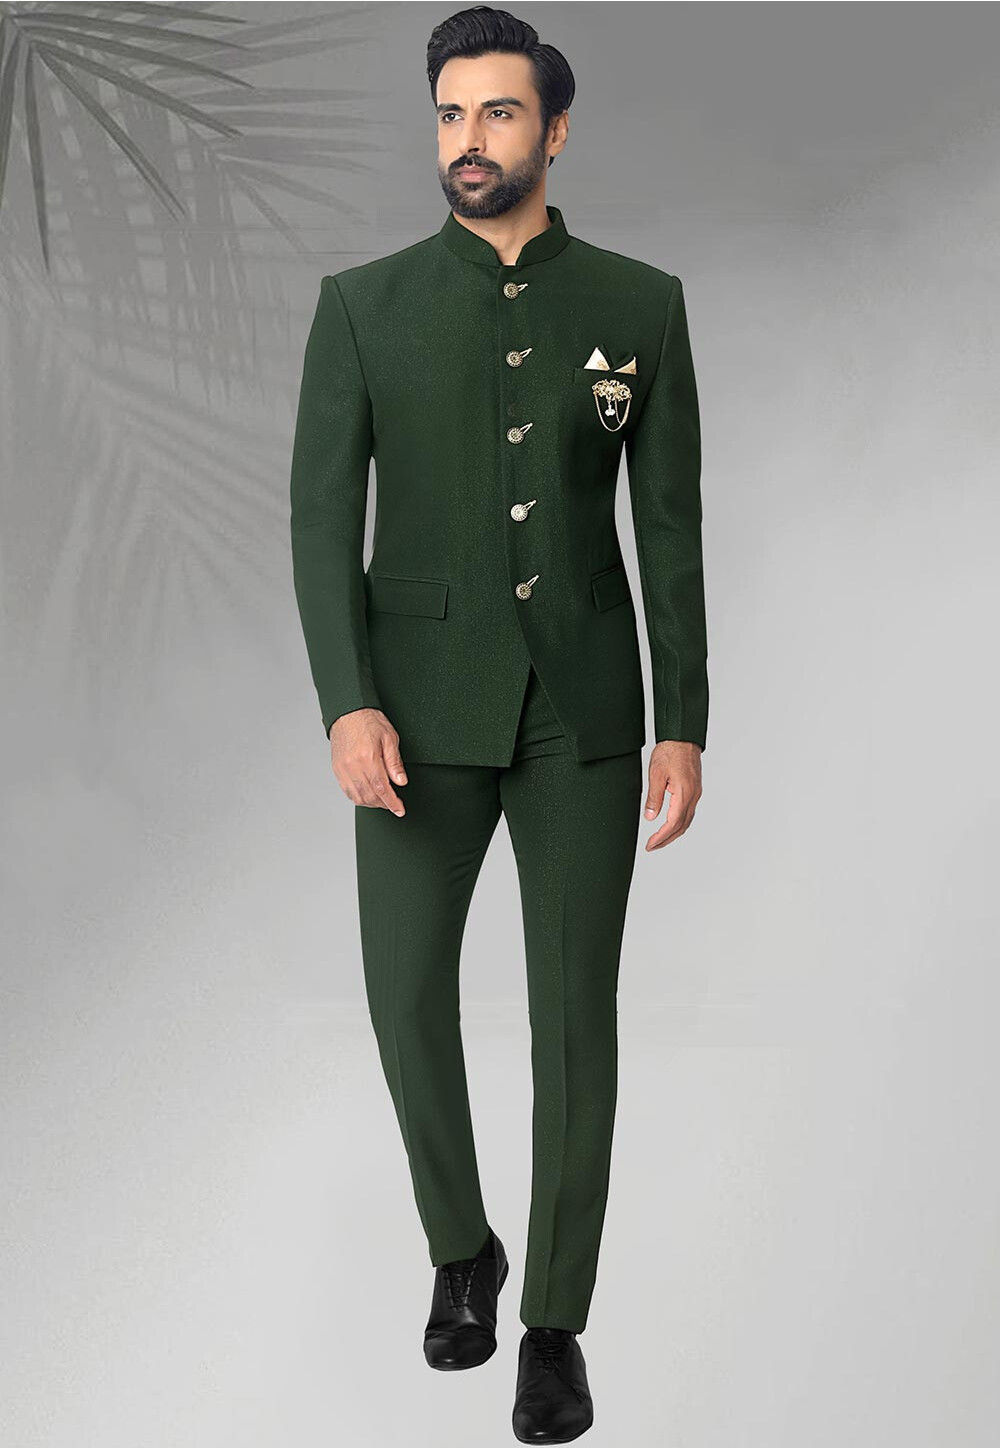 Bennevis | Fashion suits for men, Dress suits for men, Designer suits for  men